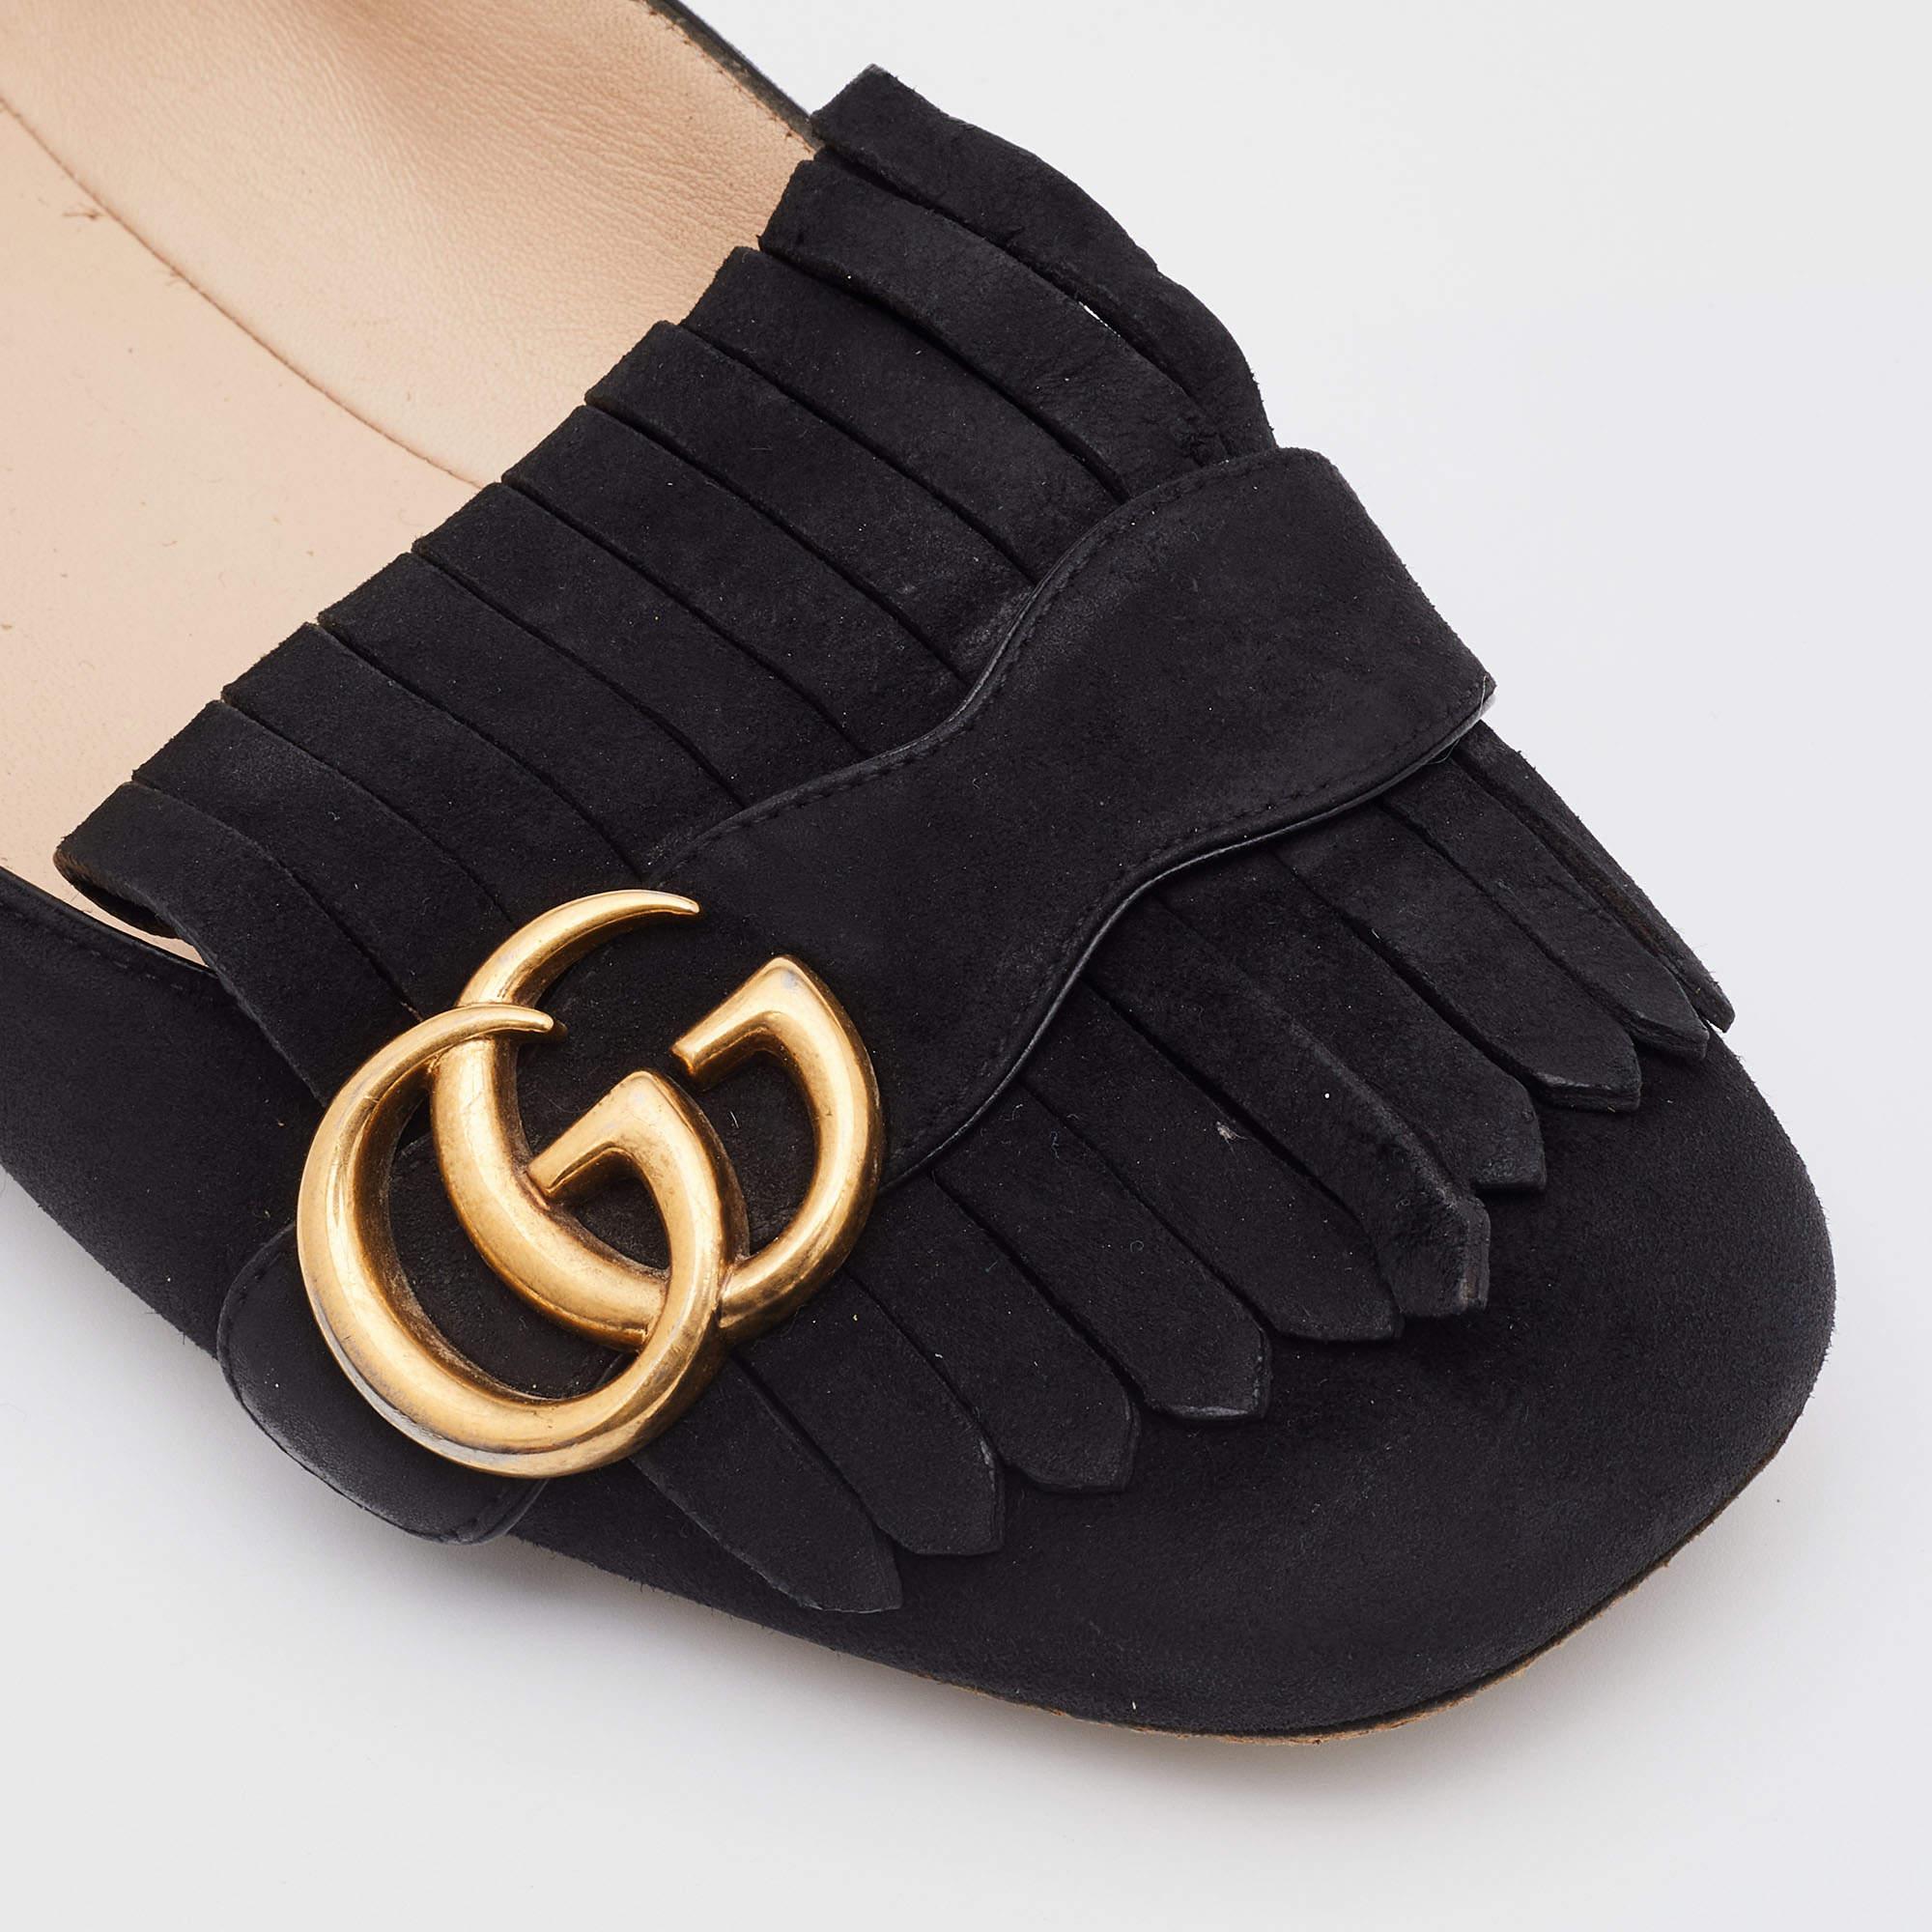 Gucci Black Suede GG Marmont Fringe Detail Ballet Flats Size 39.5 3